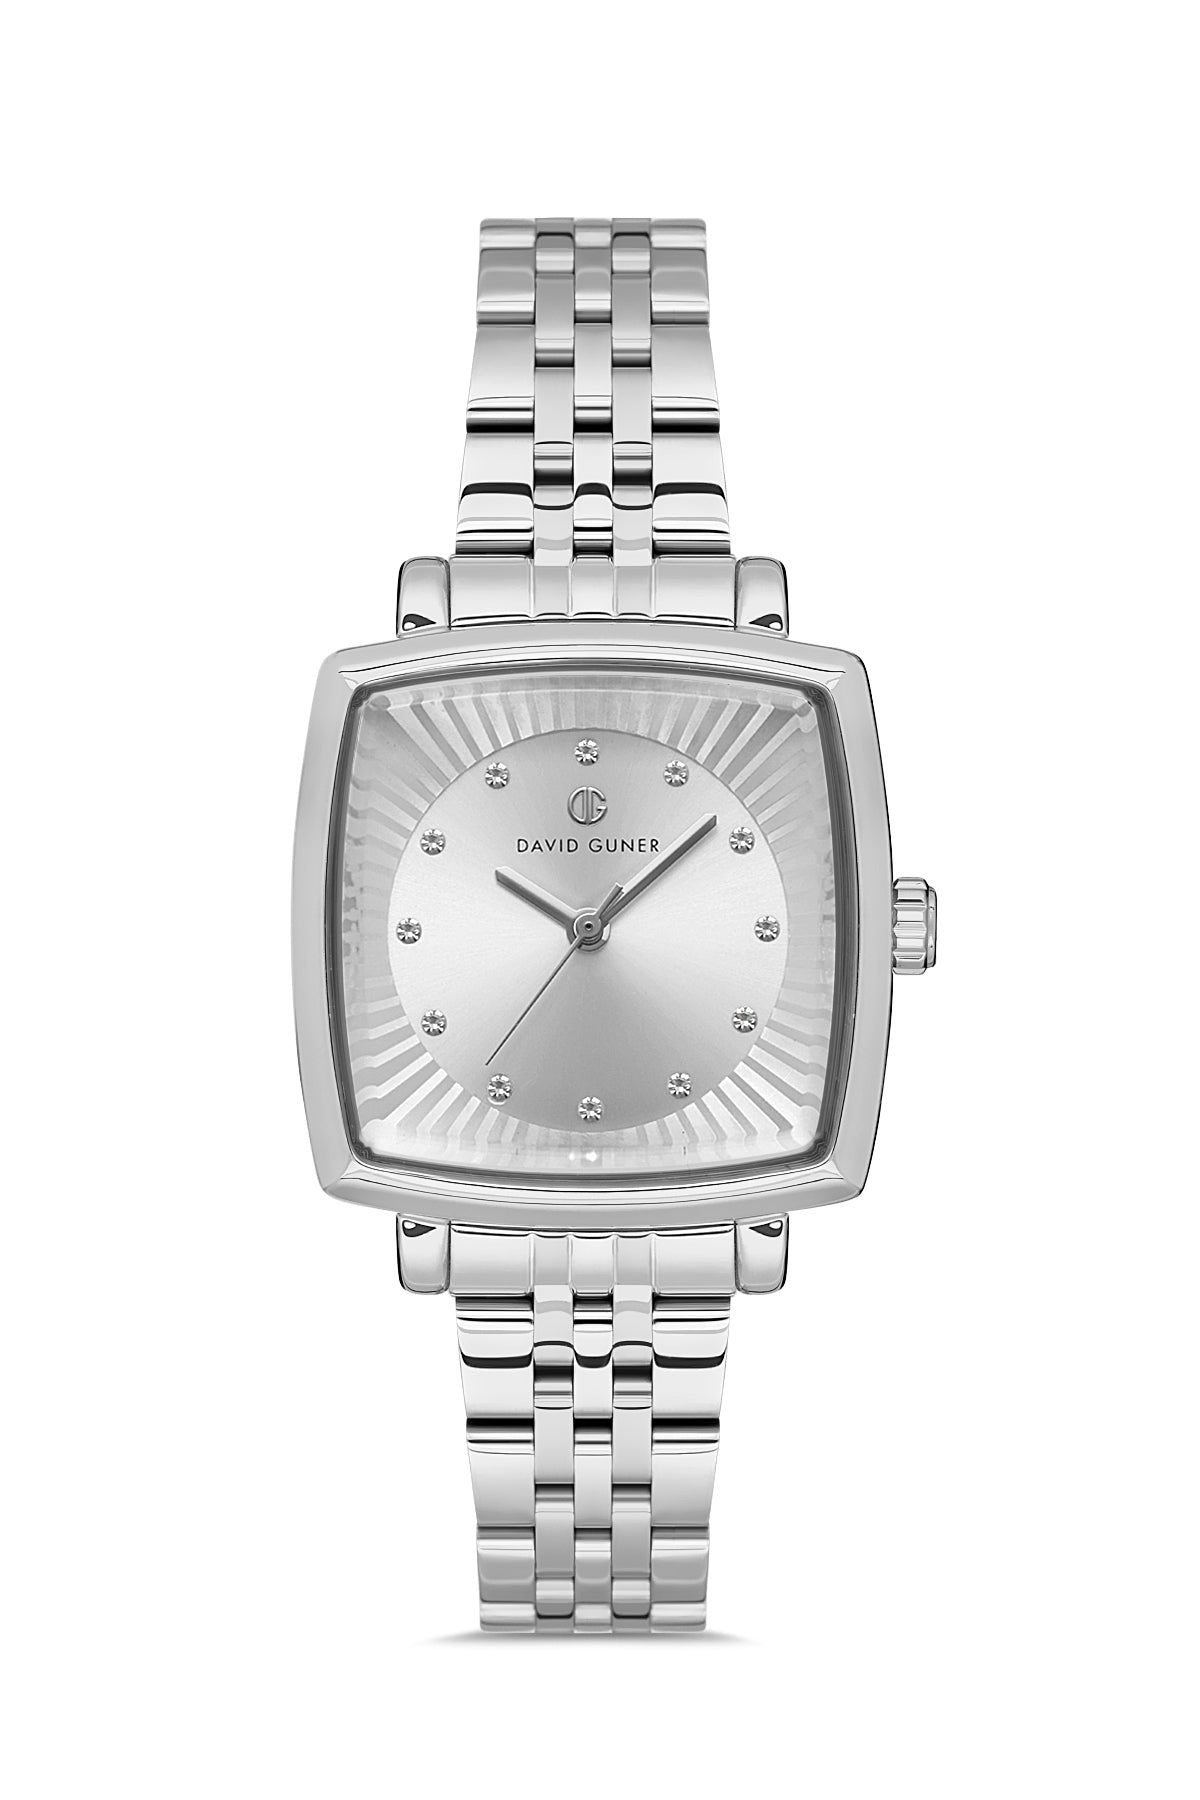 DAVID GUNER Silver Plated Women's Wristwatch with Silver Strap